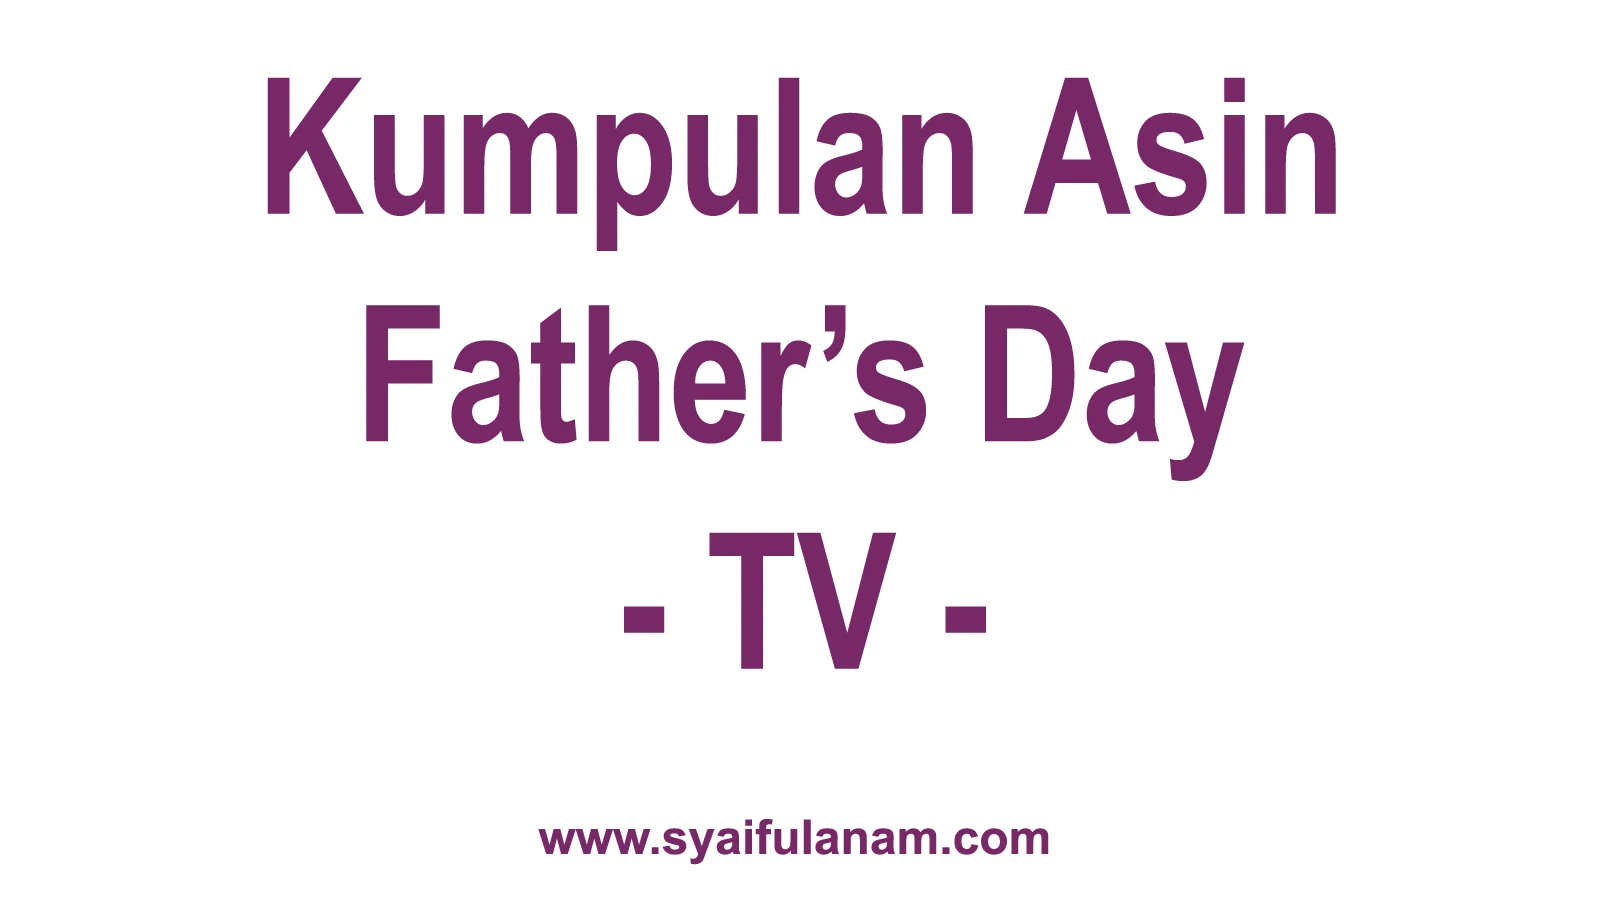 Kumpulan Asin Father's Day TV